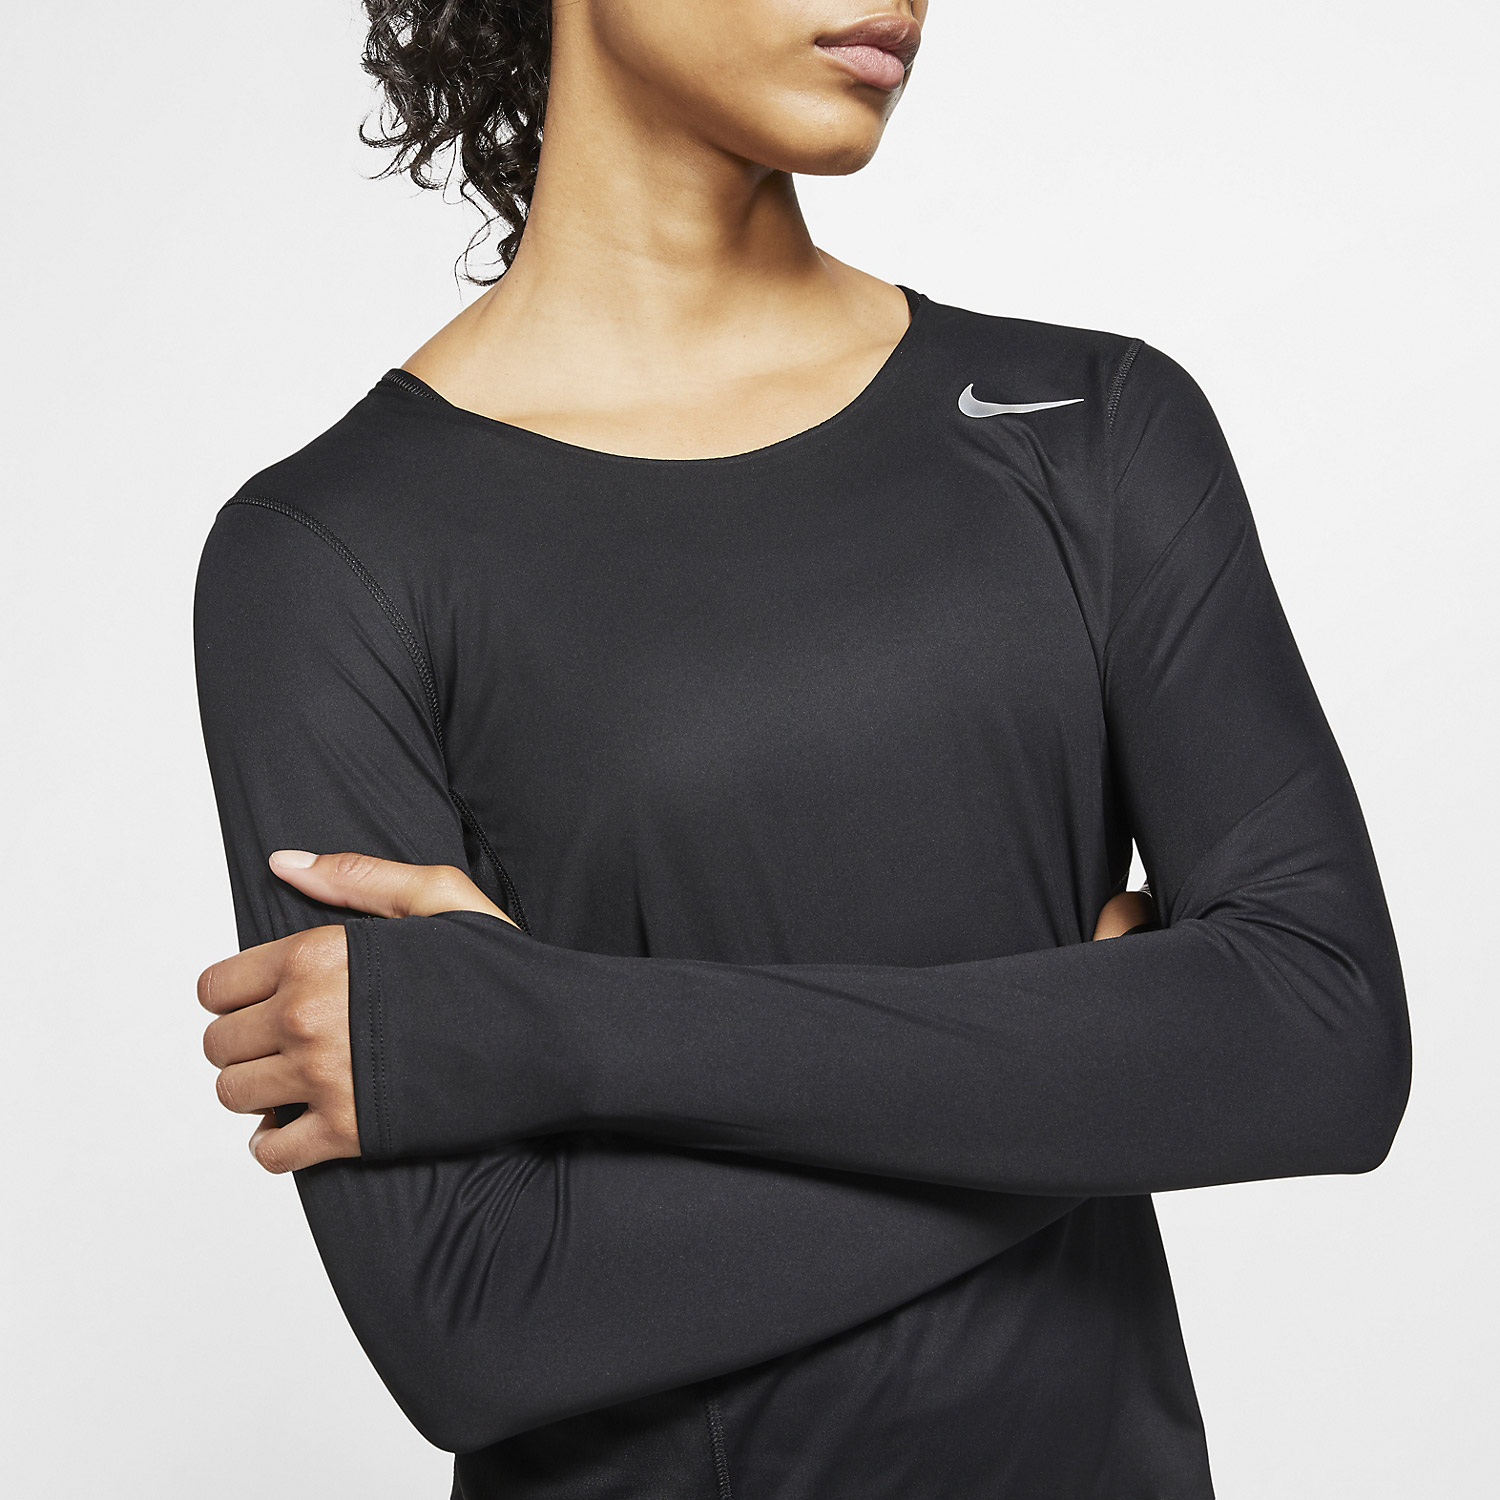 Nike City Sleek Women's Running Shirt - Black